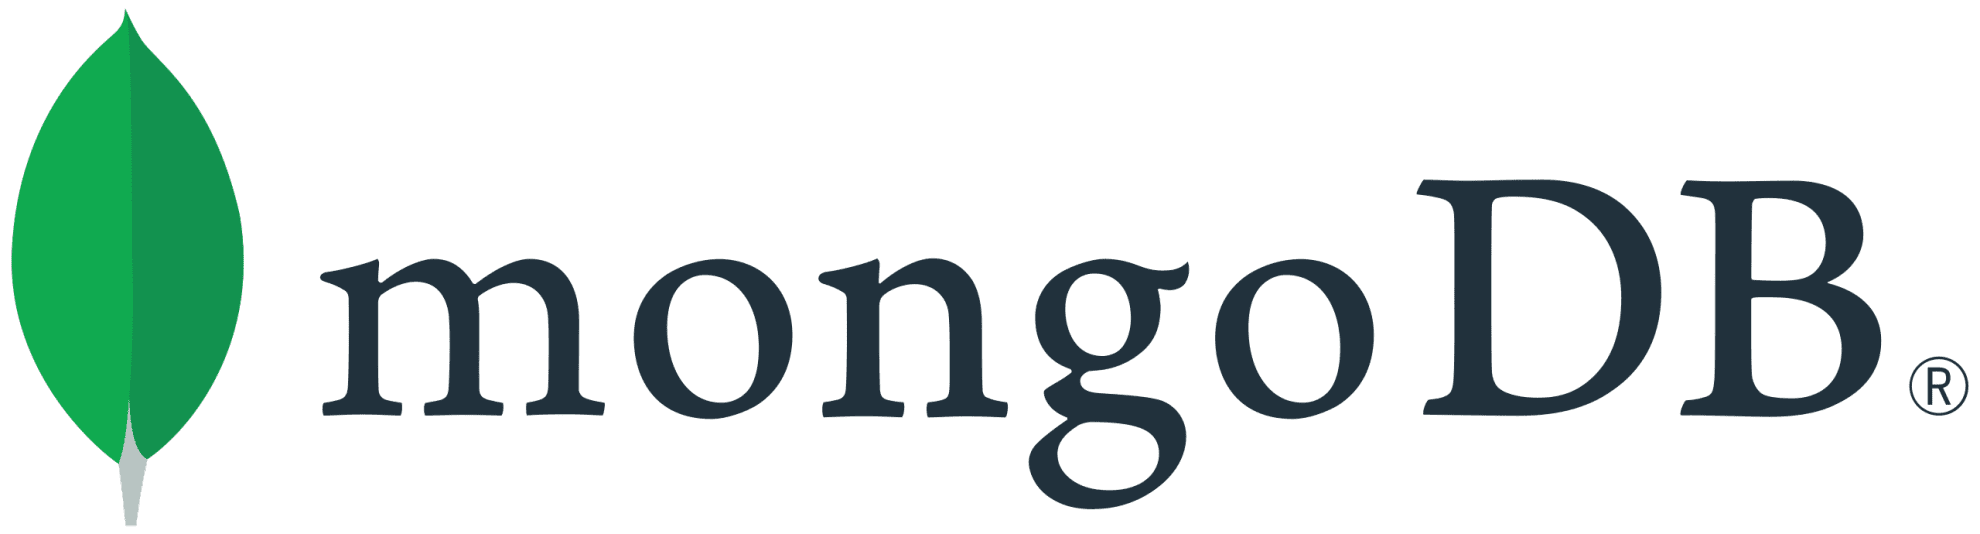 rome business school partner mongo db logo